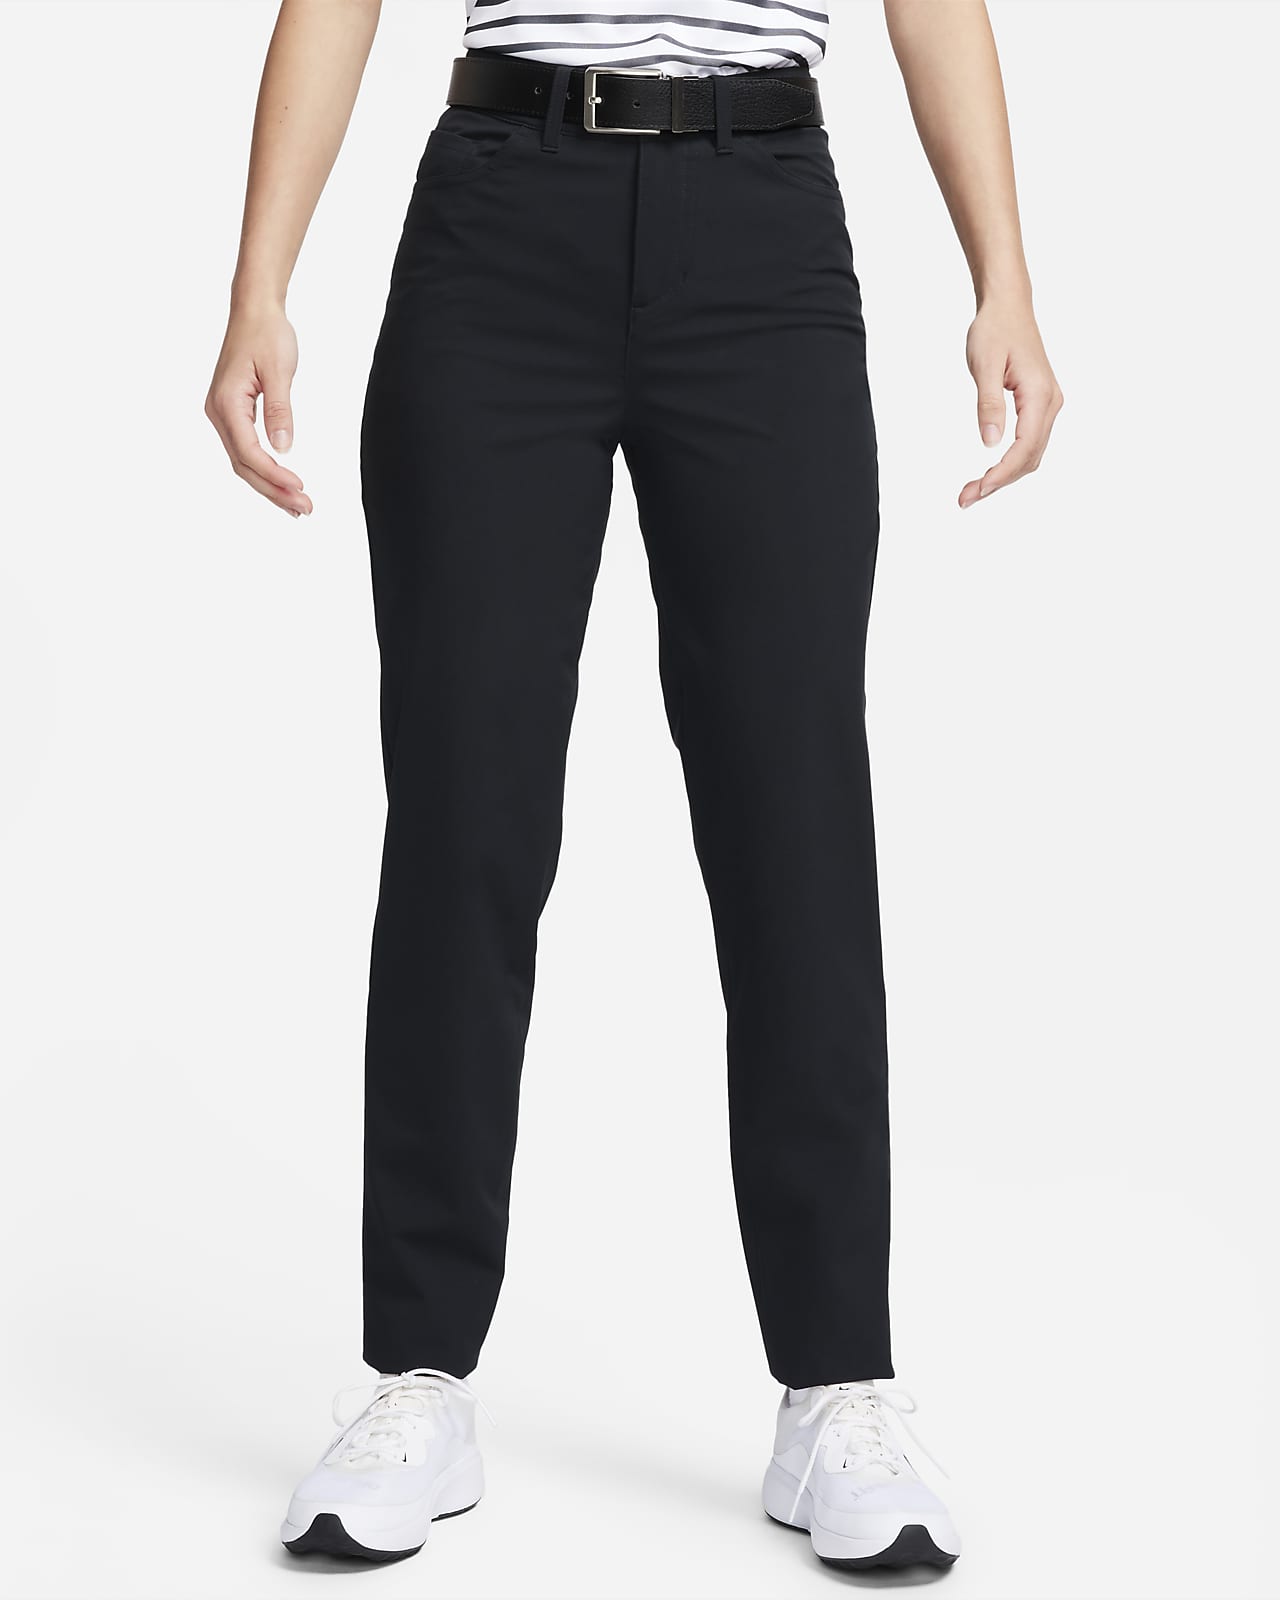 Nike FutureMove Women's Dri-FIT High-Waisted Pants with Pockets. Nike.com